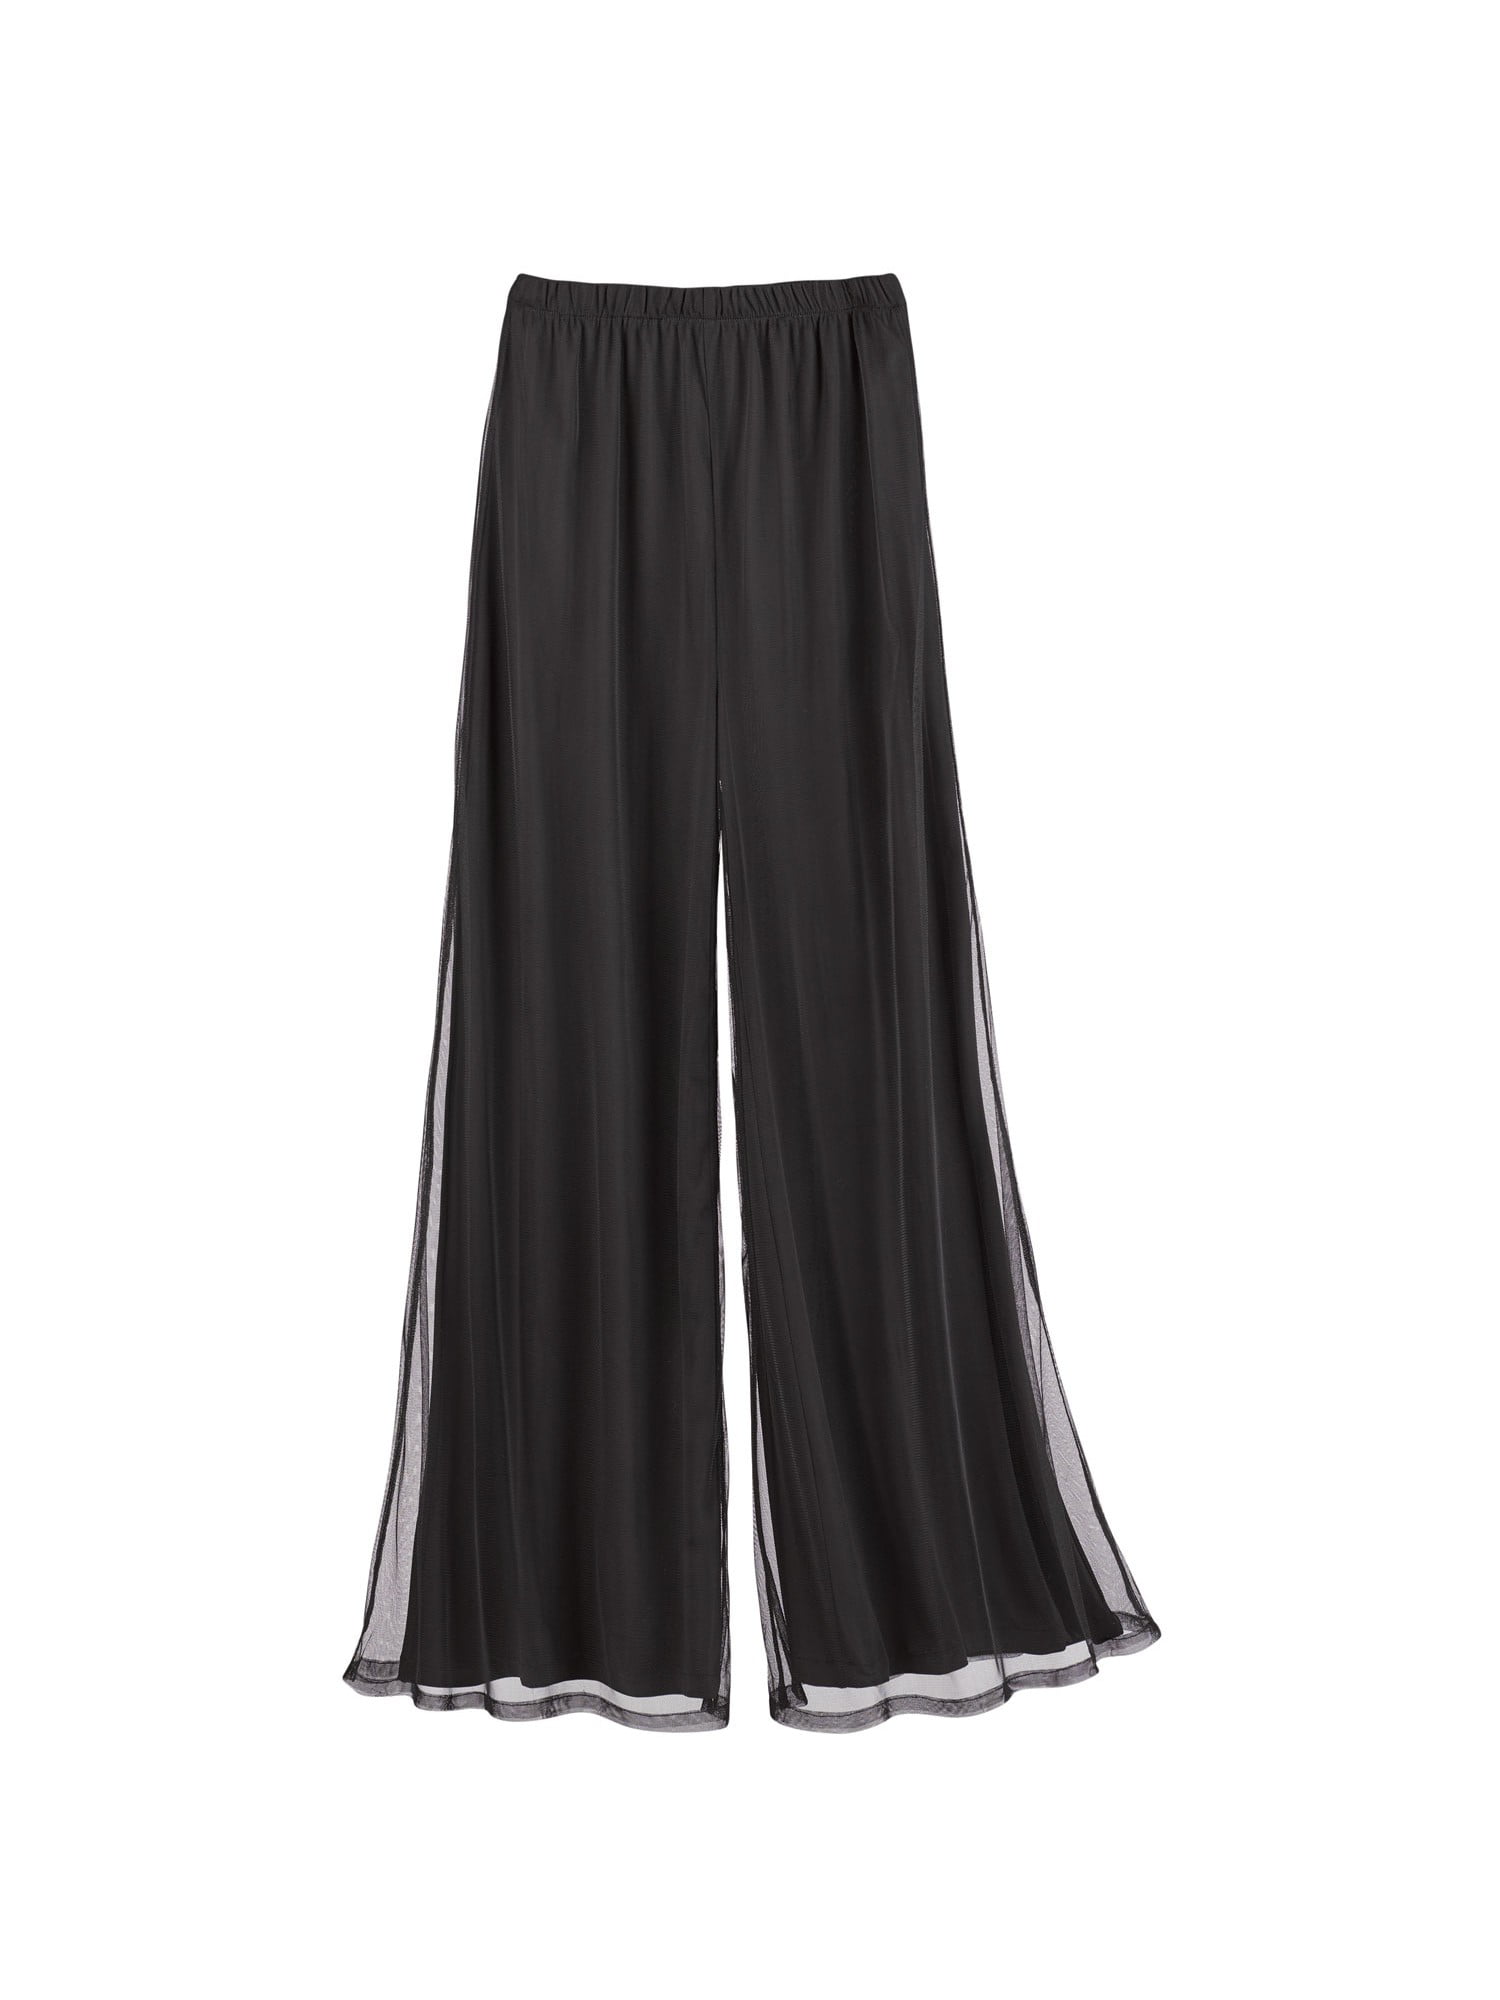 Lindi - Lindi Women's Sheer Overlay Dress Pants - Black Wide Leg ...